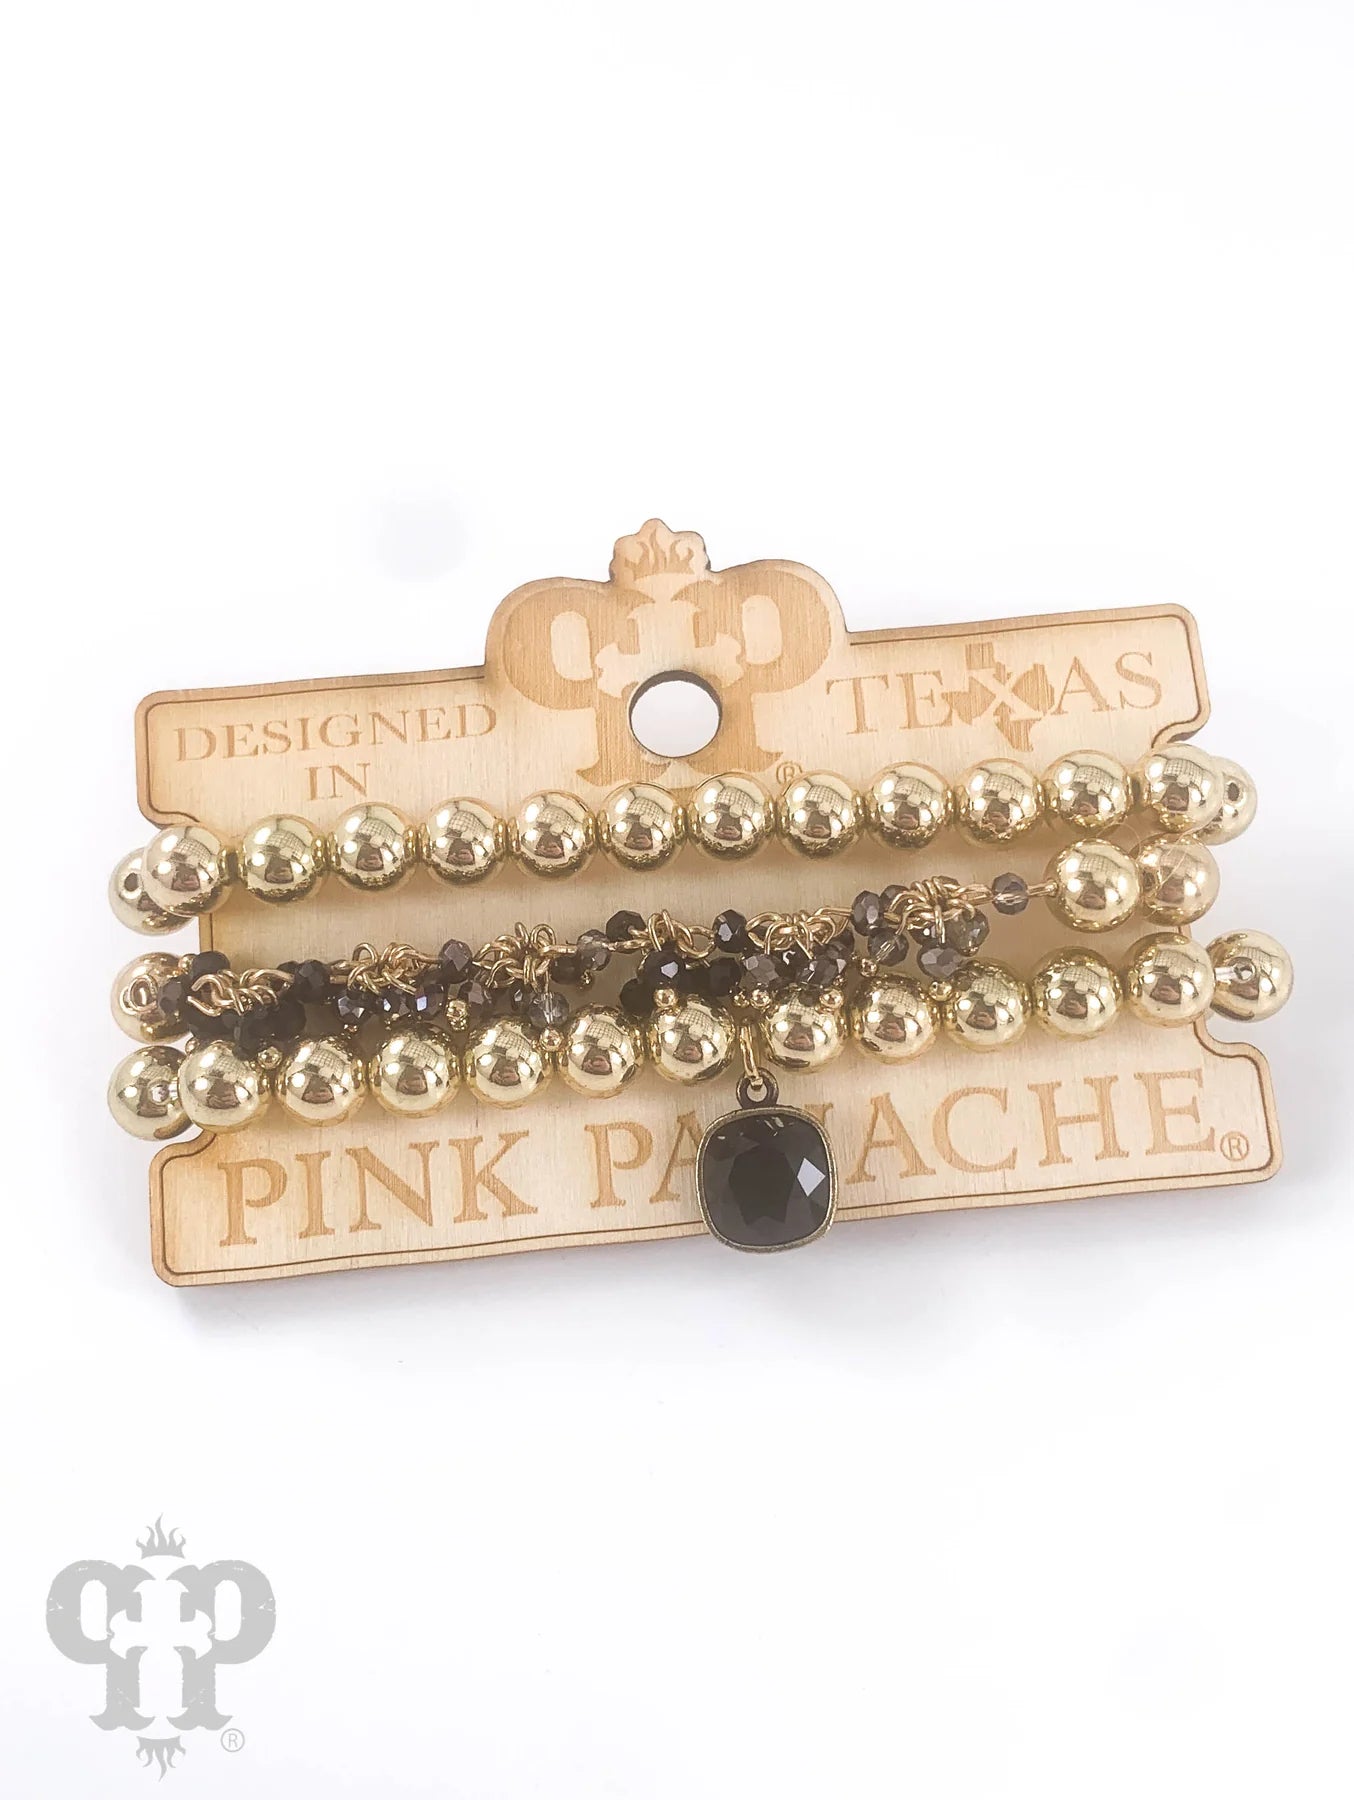 Black cluster pink panache bracelet set